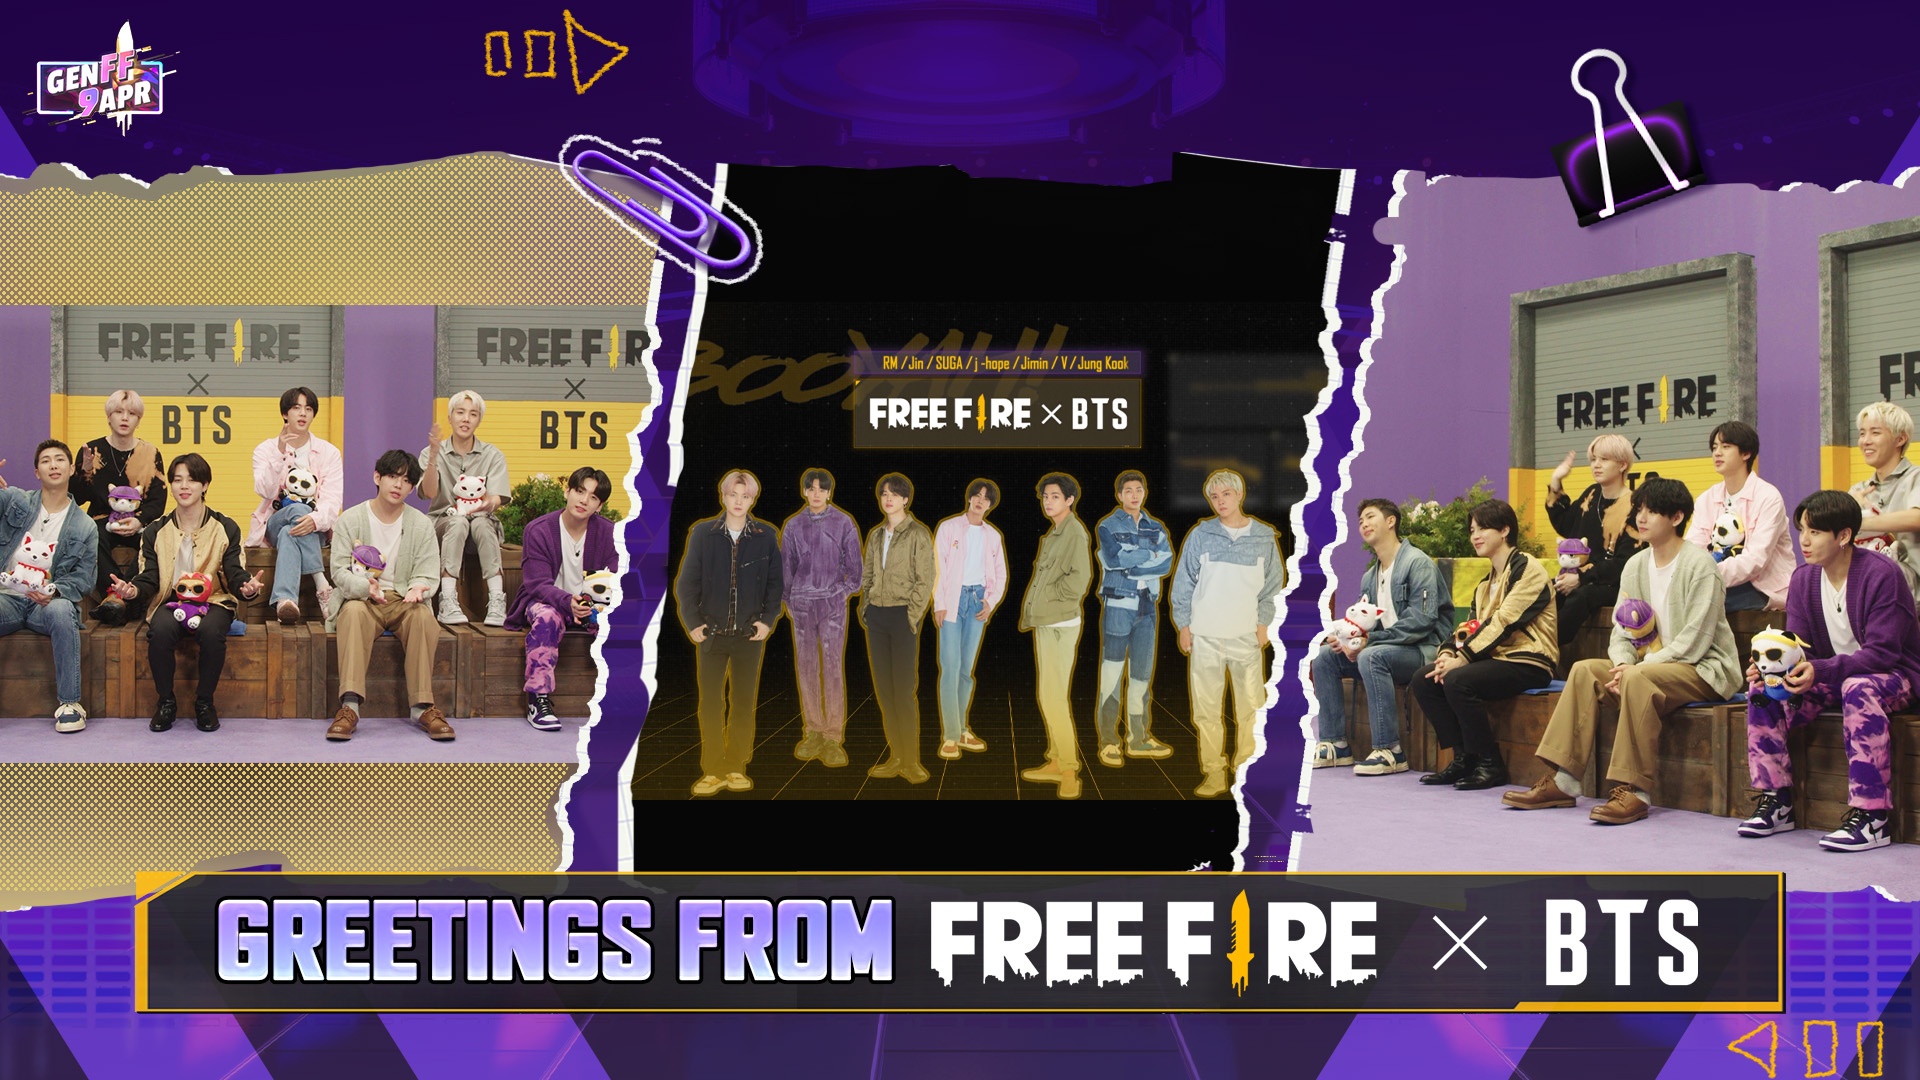 BTS Becomes Free Fire's Latest Global Ambassadors